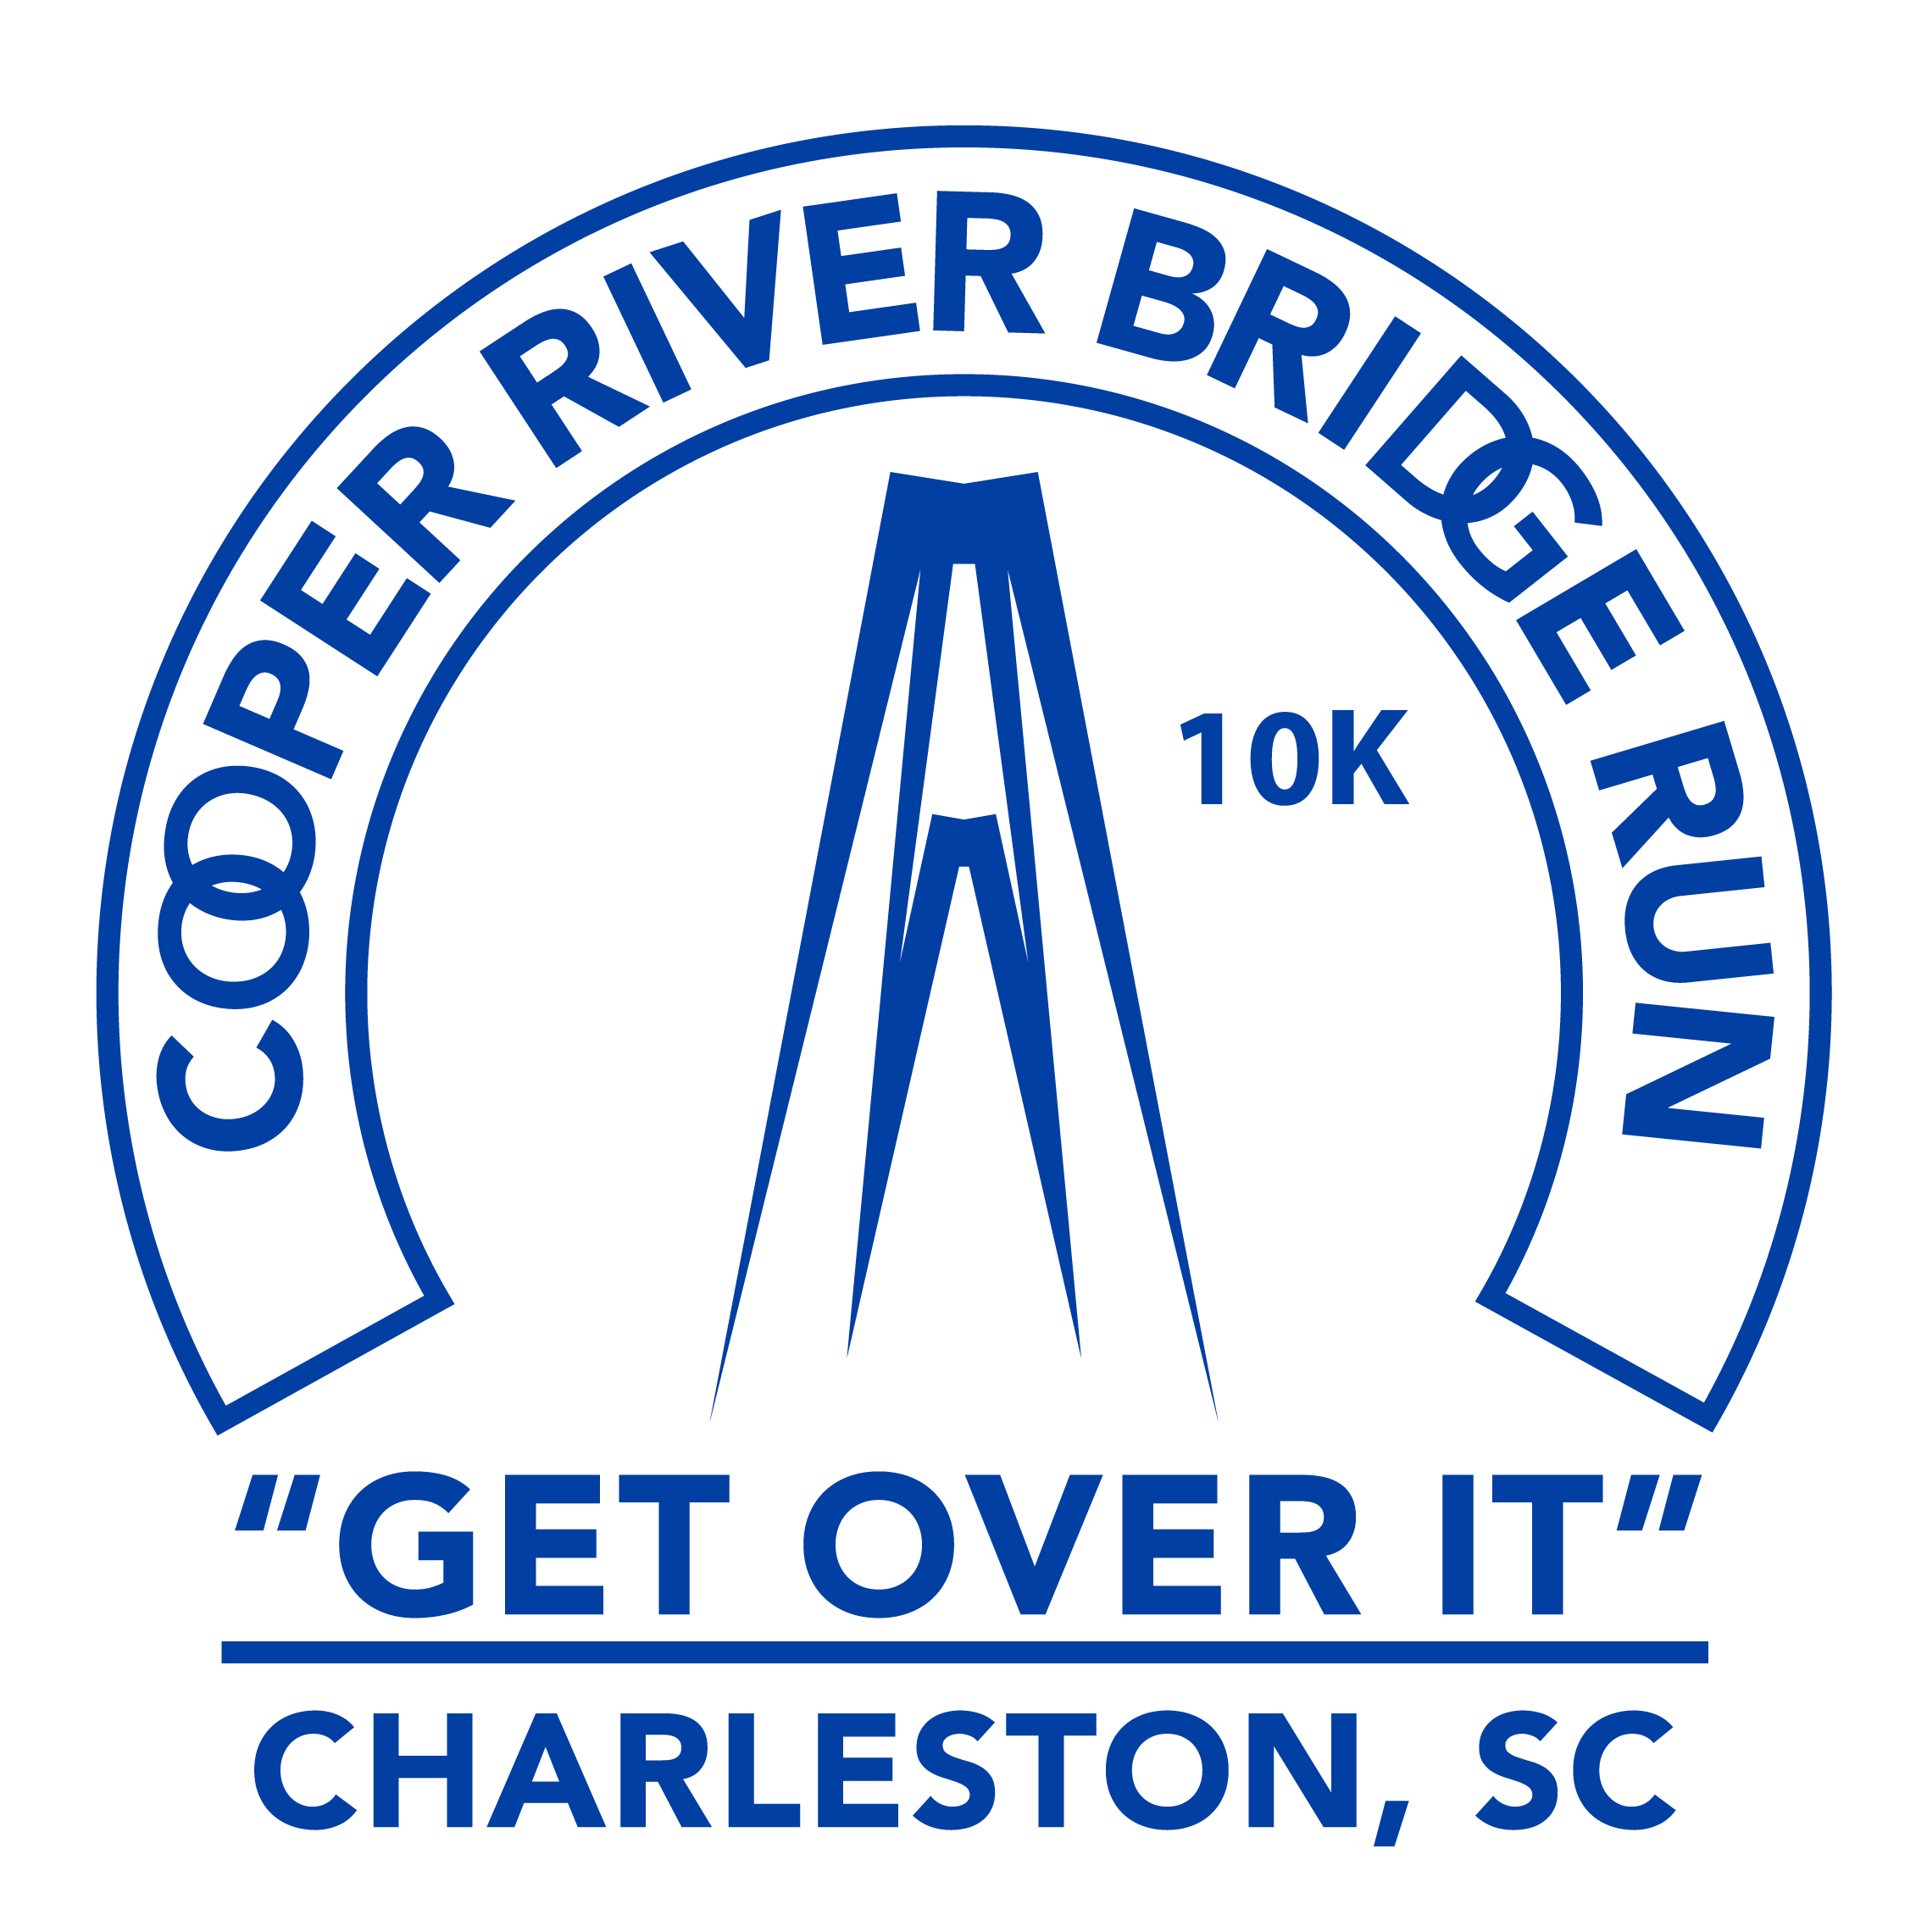 The Cooper River Bridge Run